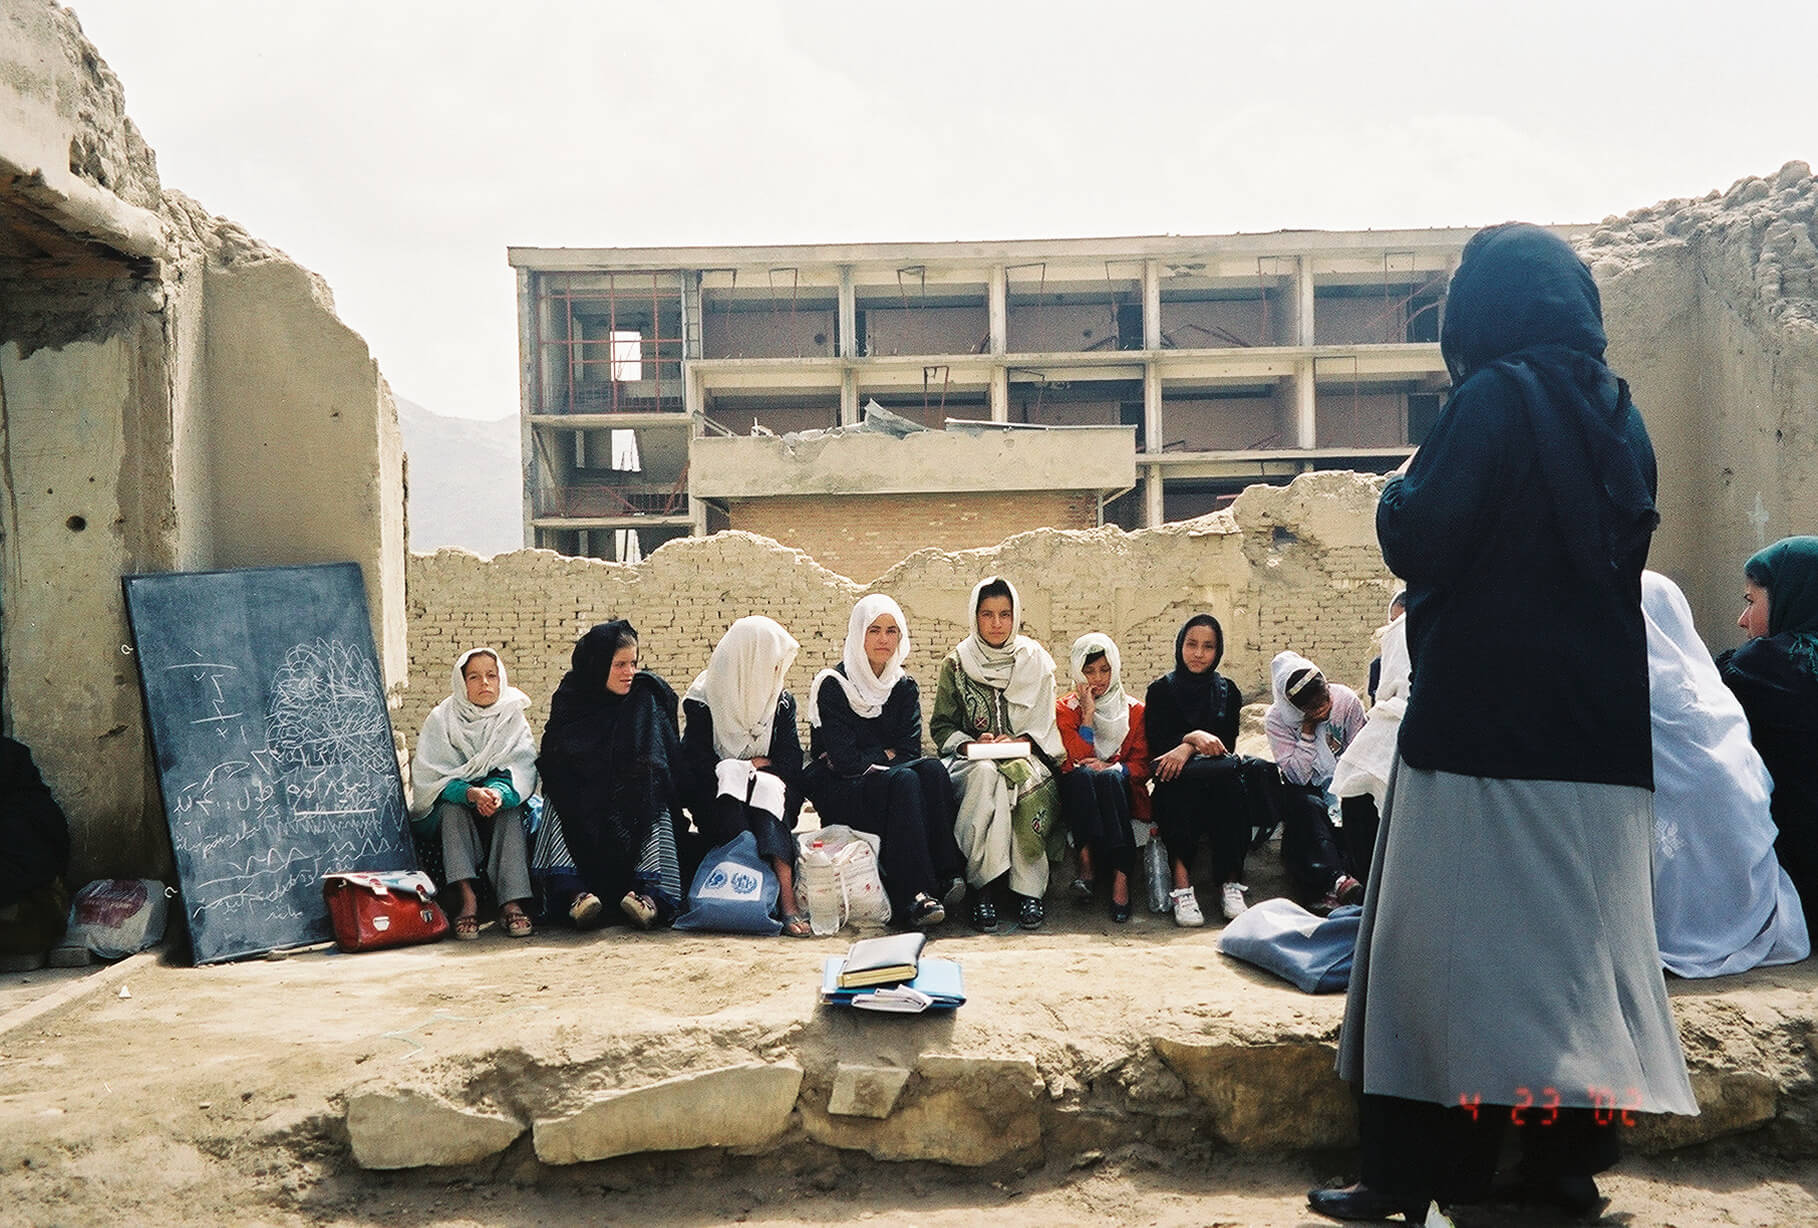 Ansaray - Kabul, 2002. The Children of War - Flickr